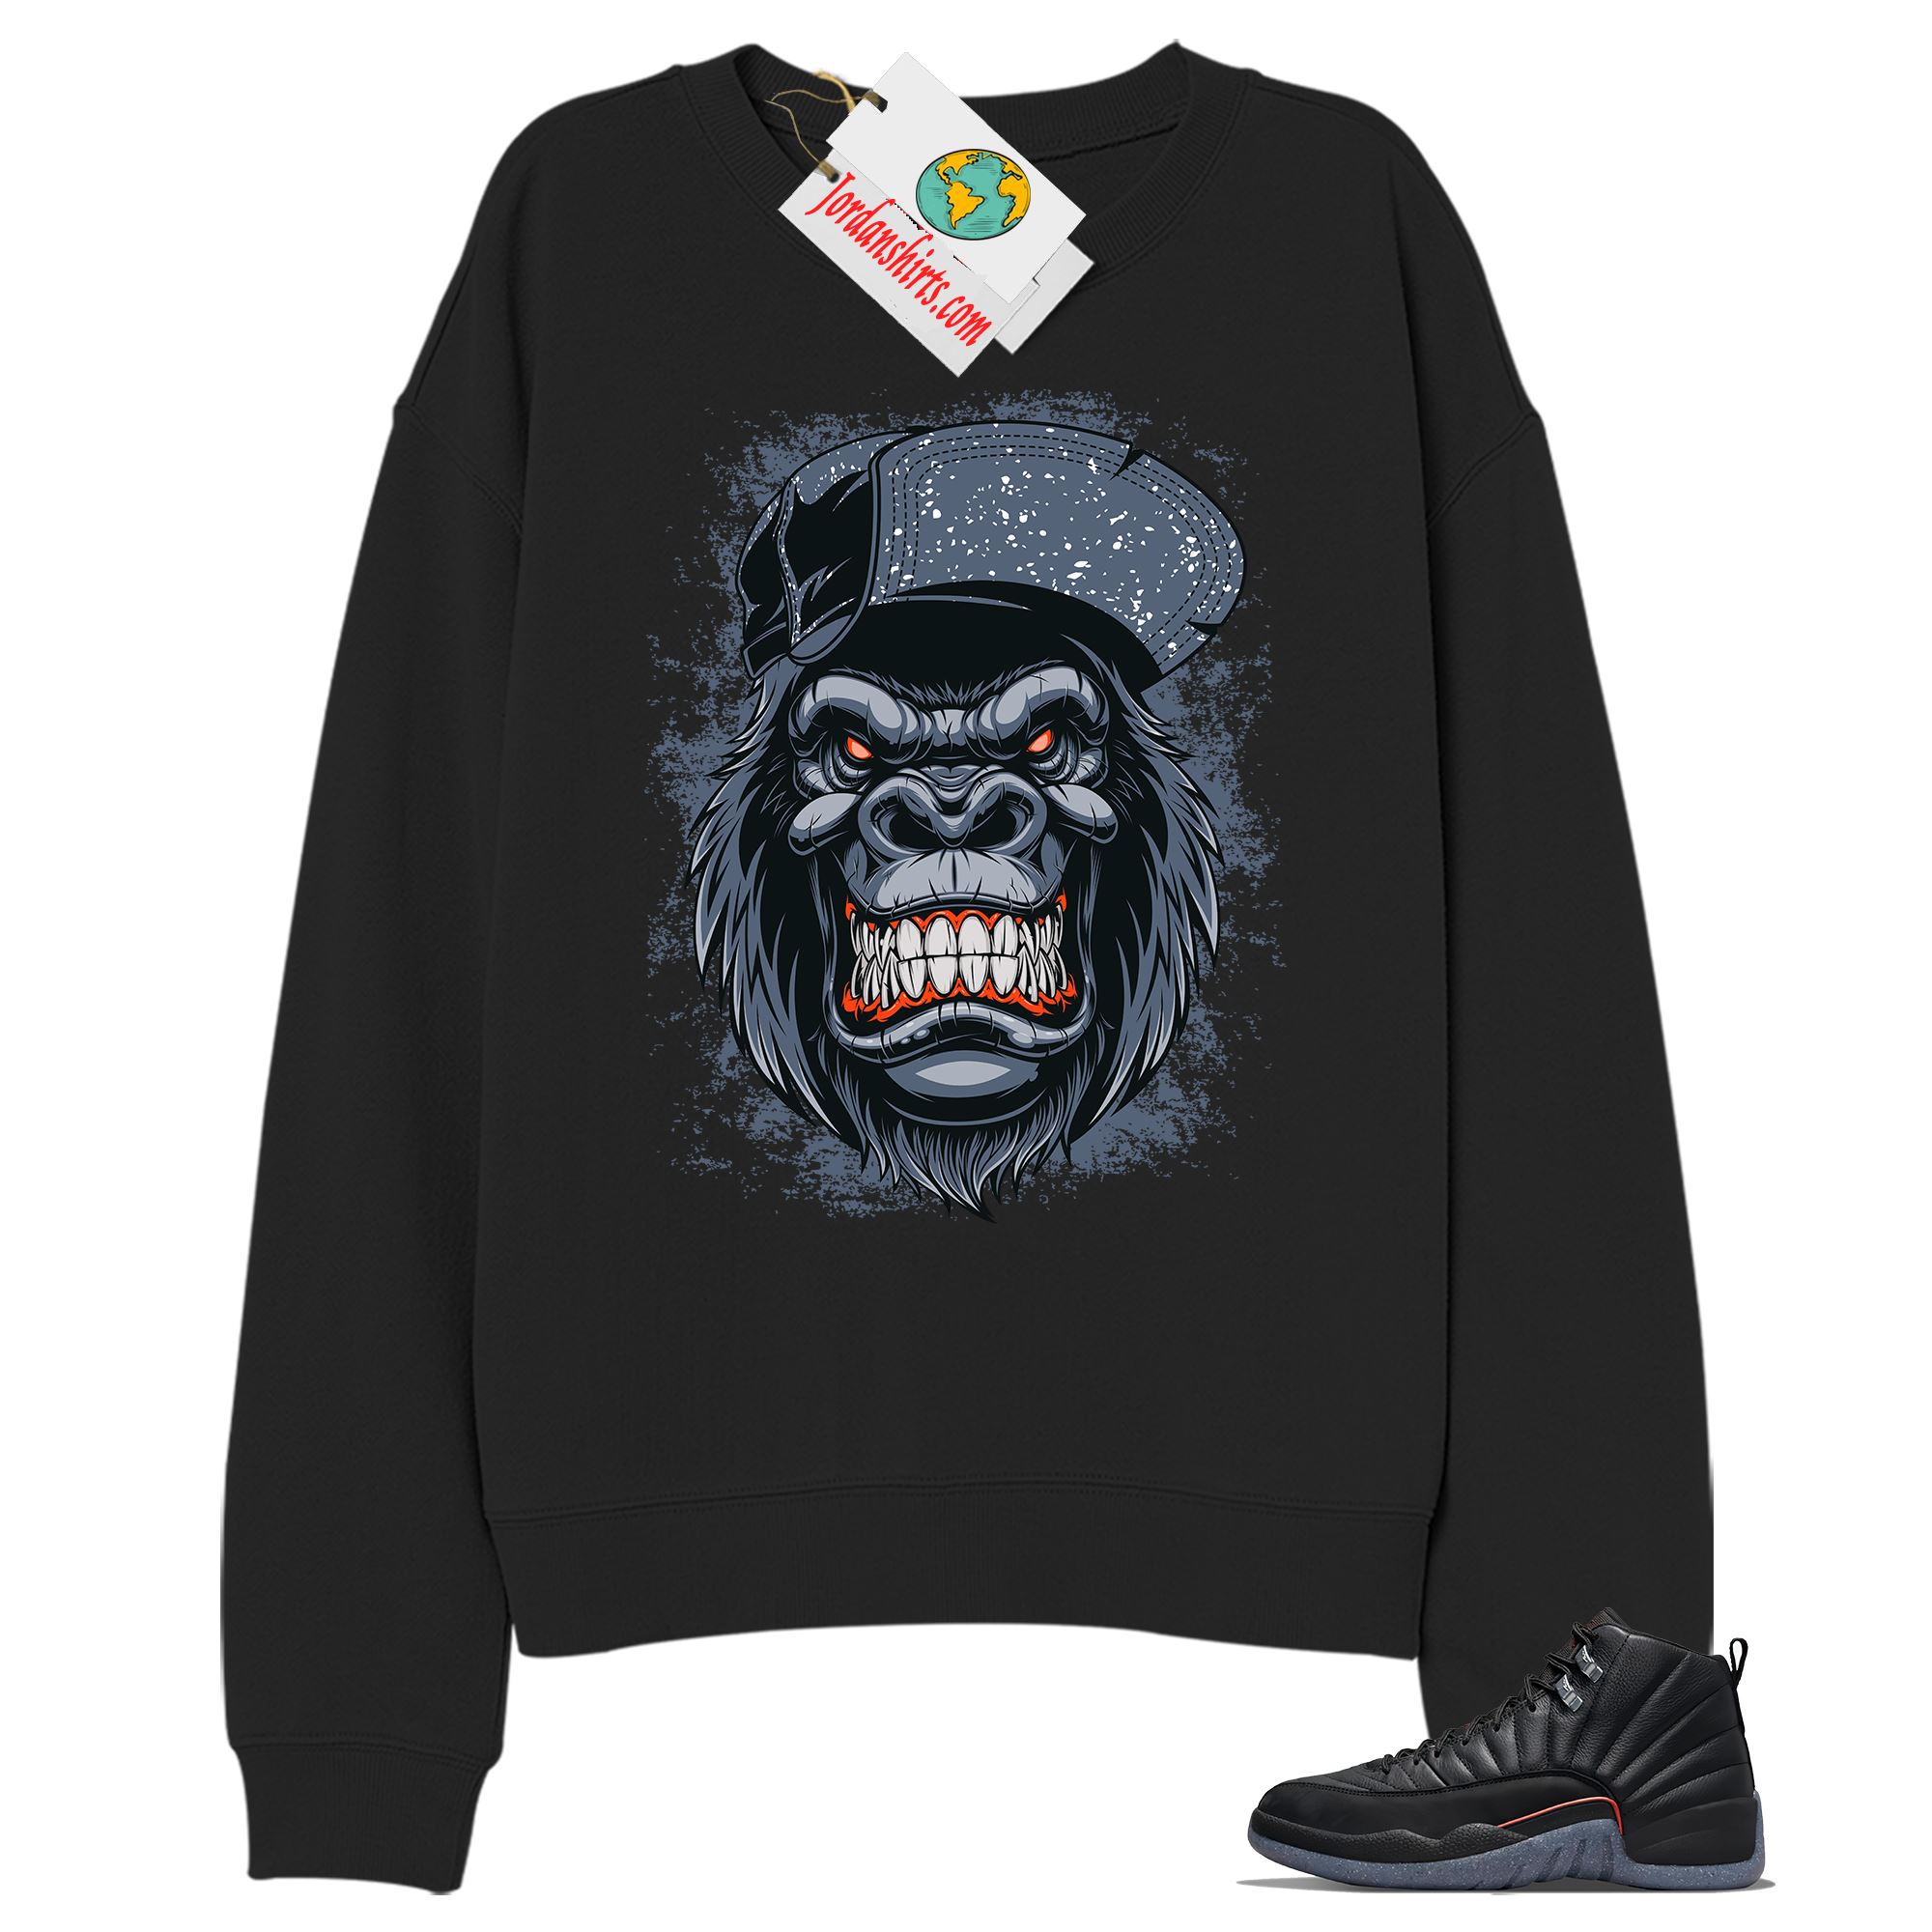 Jordan 12 Sweatshirt, Ferocious Gorilla Black Sweatshirt Air Jordan 12 Utility Grind 12s Size Up To 5xl